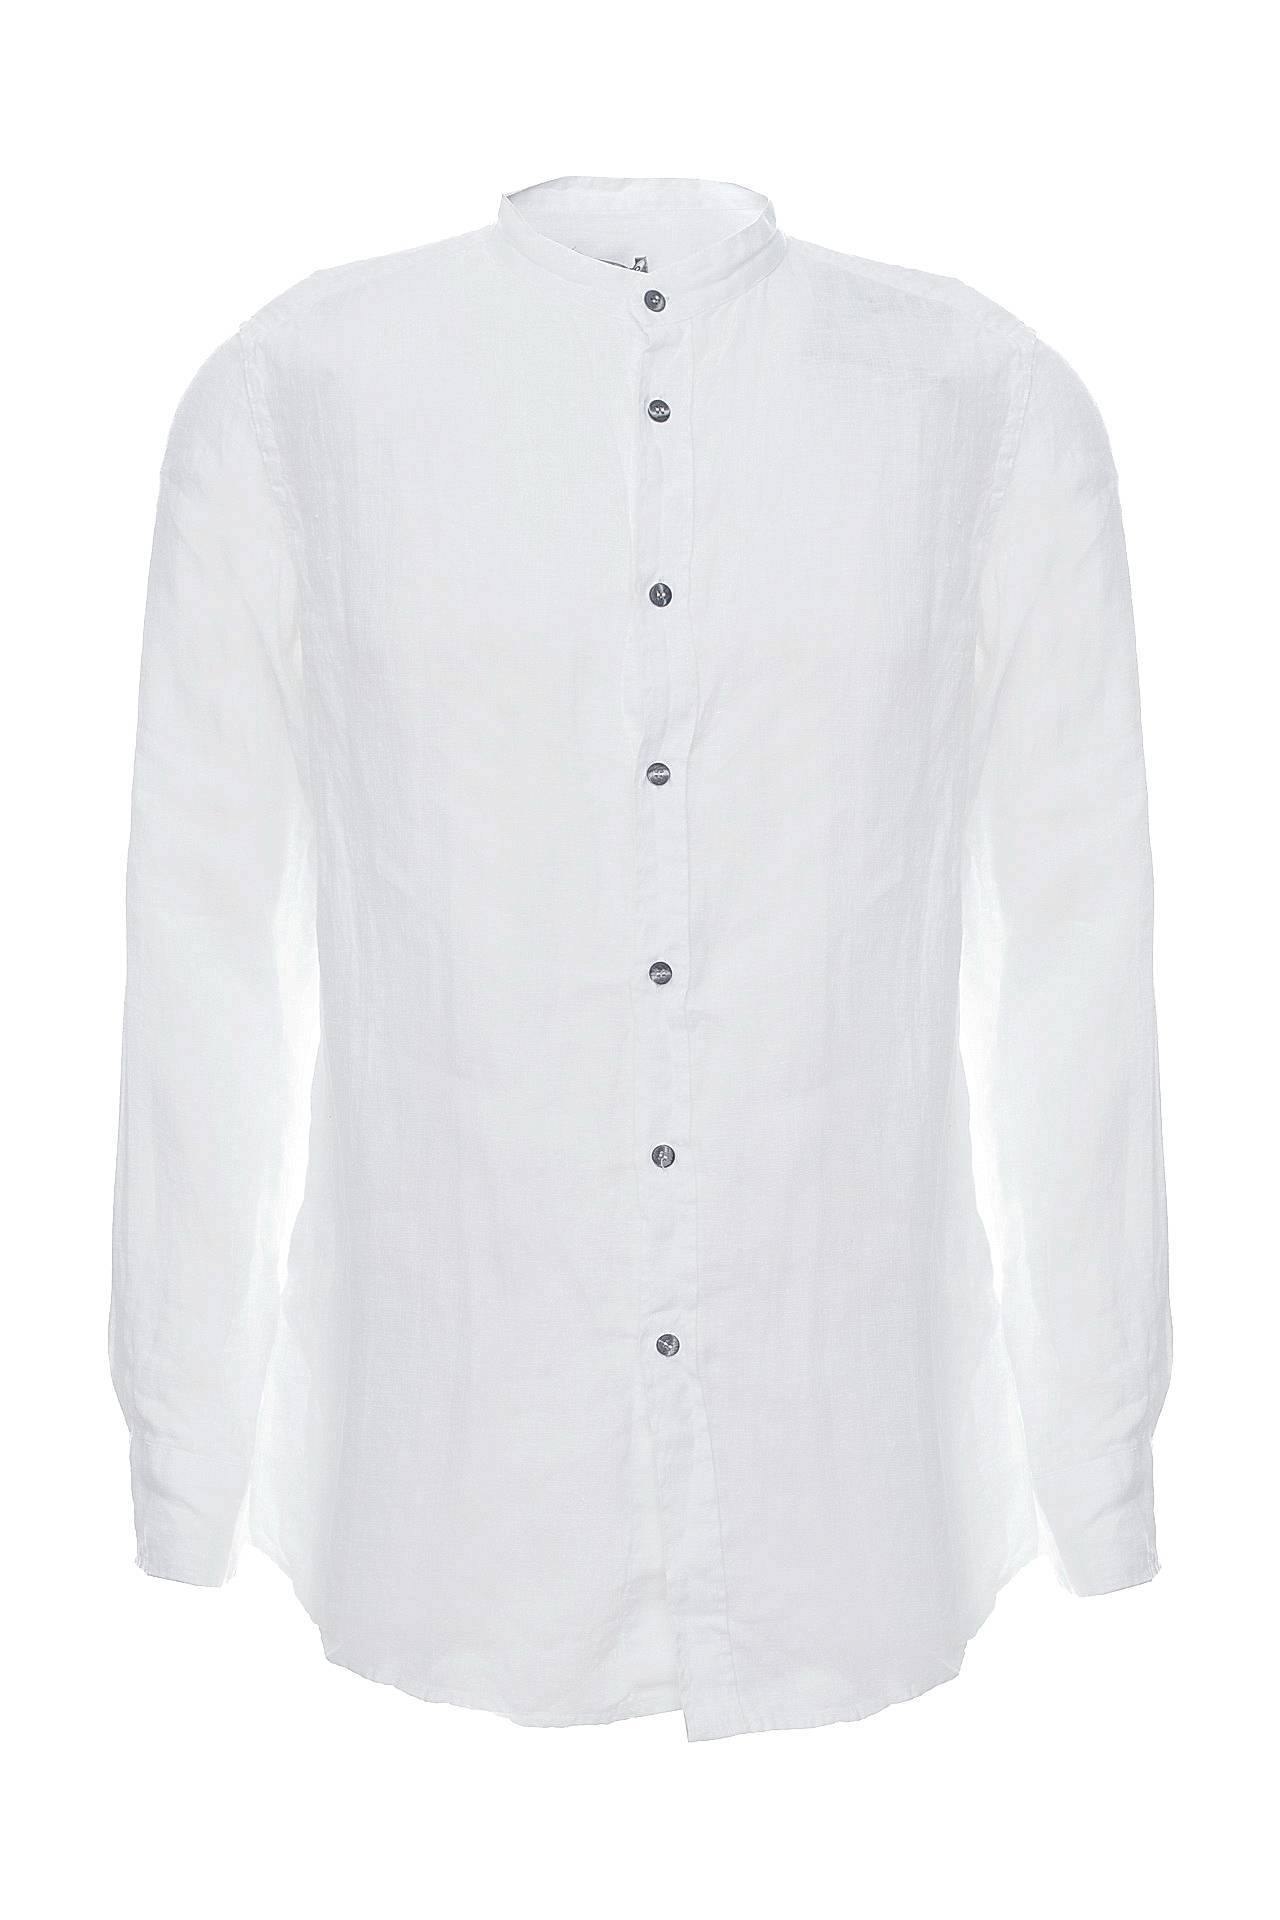 Одежда мужская Рубашка GIANNI LUPO (2505/16.2). Купить за 6800 руб.